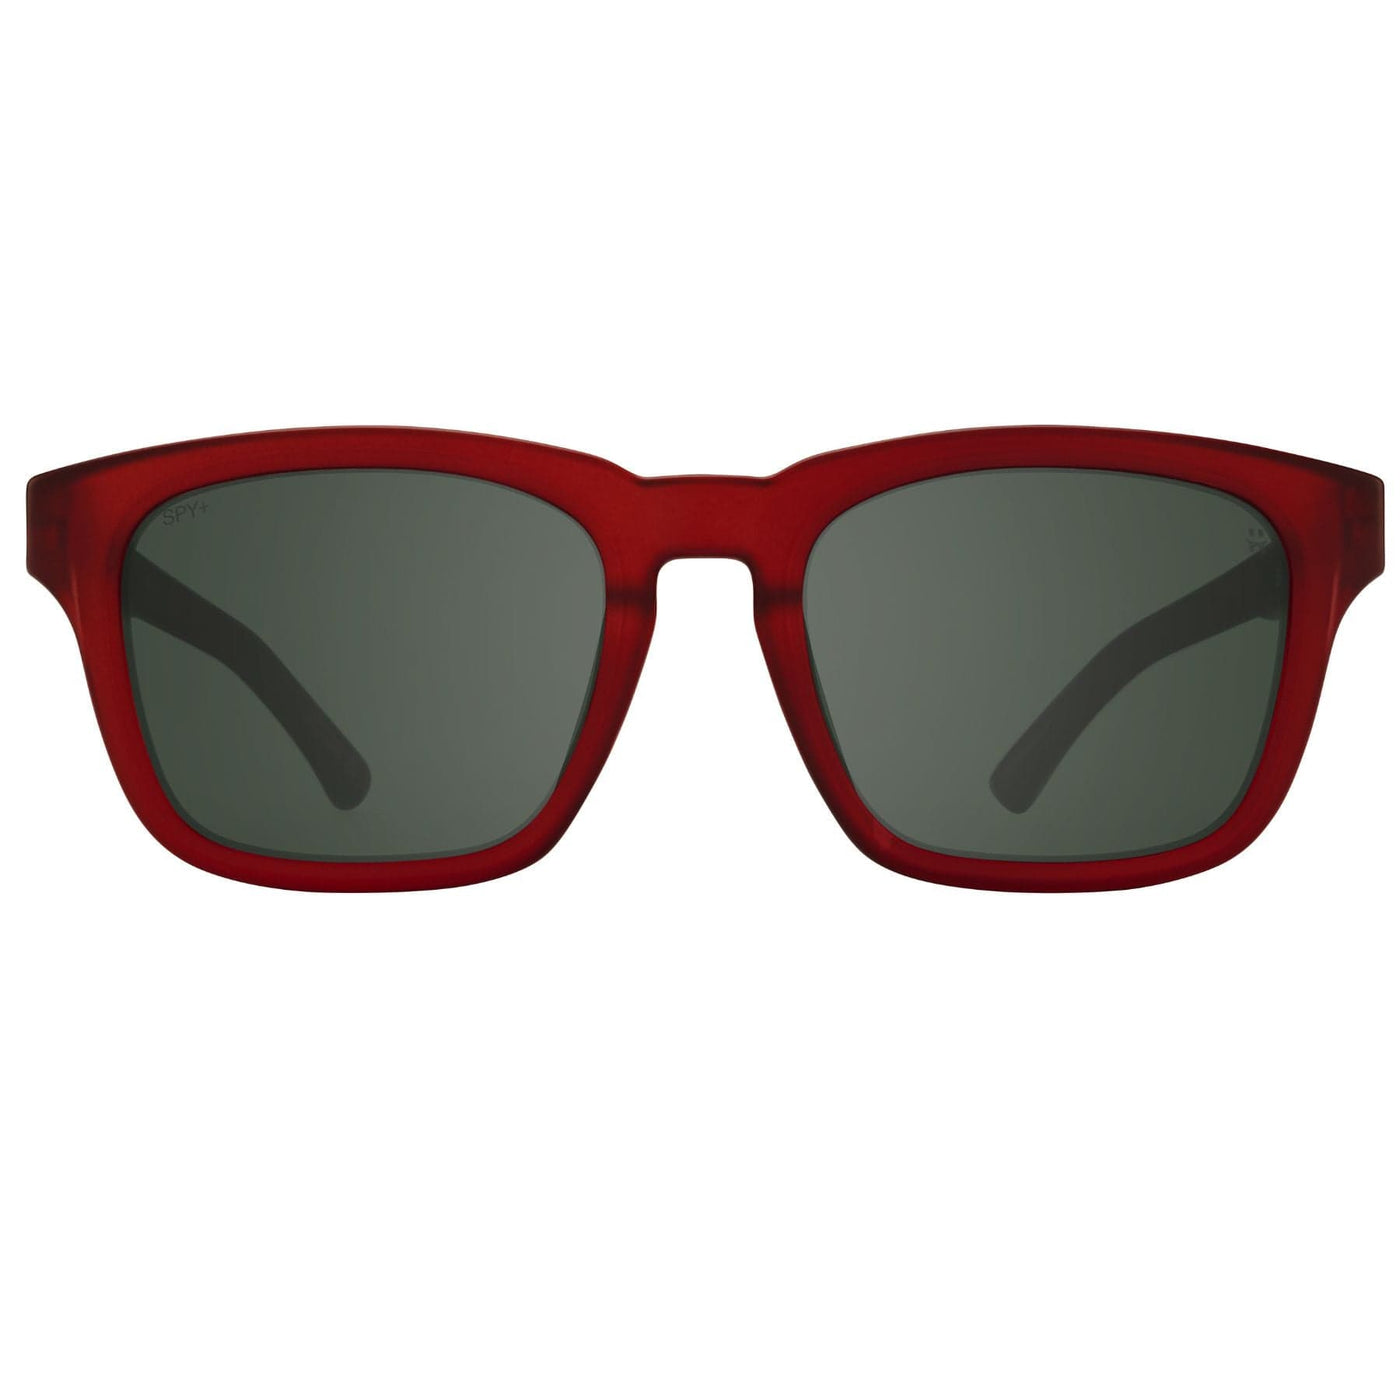 SPY SAXONY Sunglasses, Happy Lens - Gray/Green 8Lines Shop - Fast Shipping